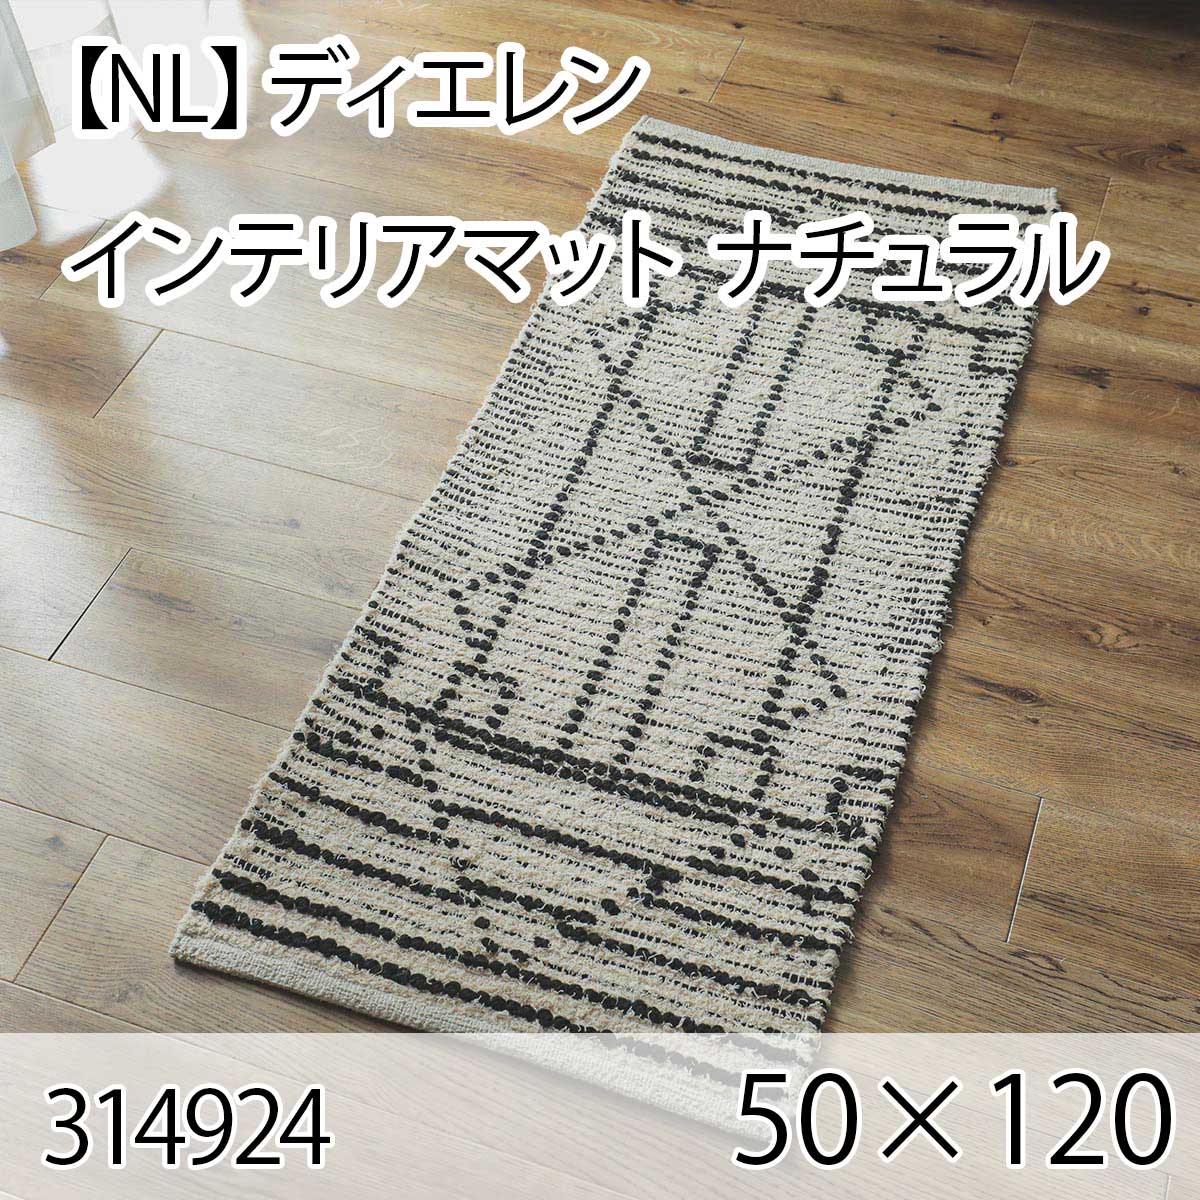 【NL】ディエレン インテリアマット 50cmx120cm ナチュラル